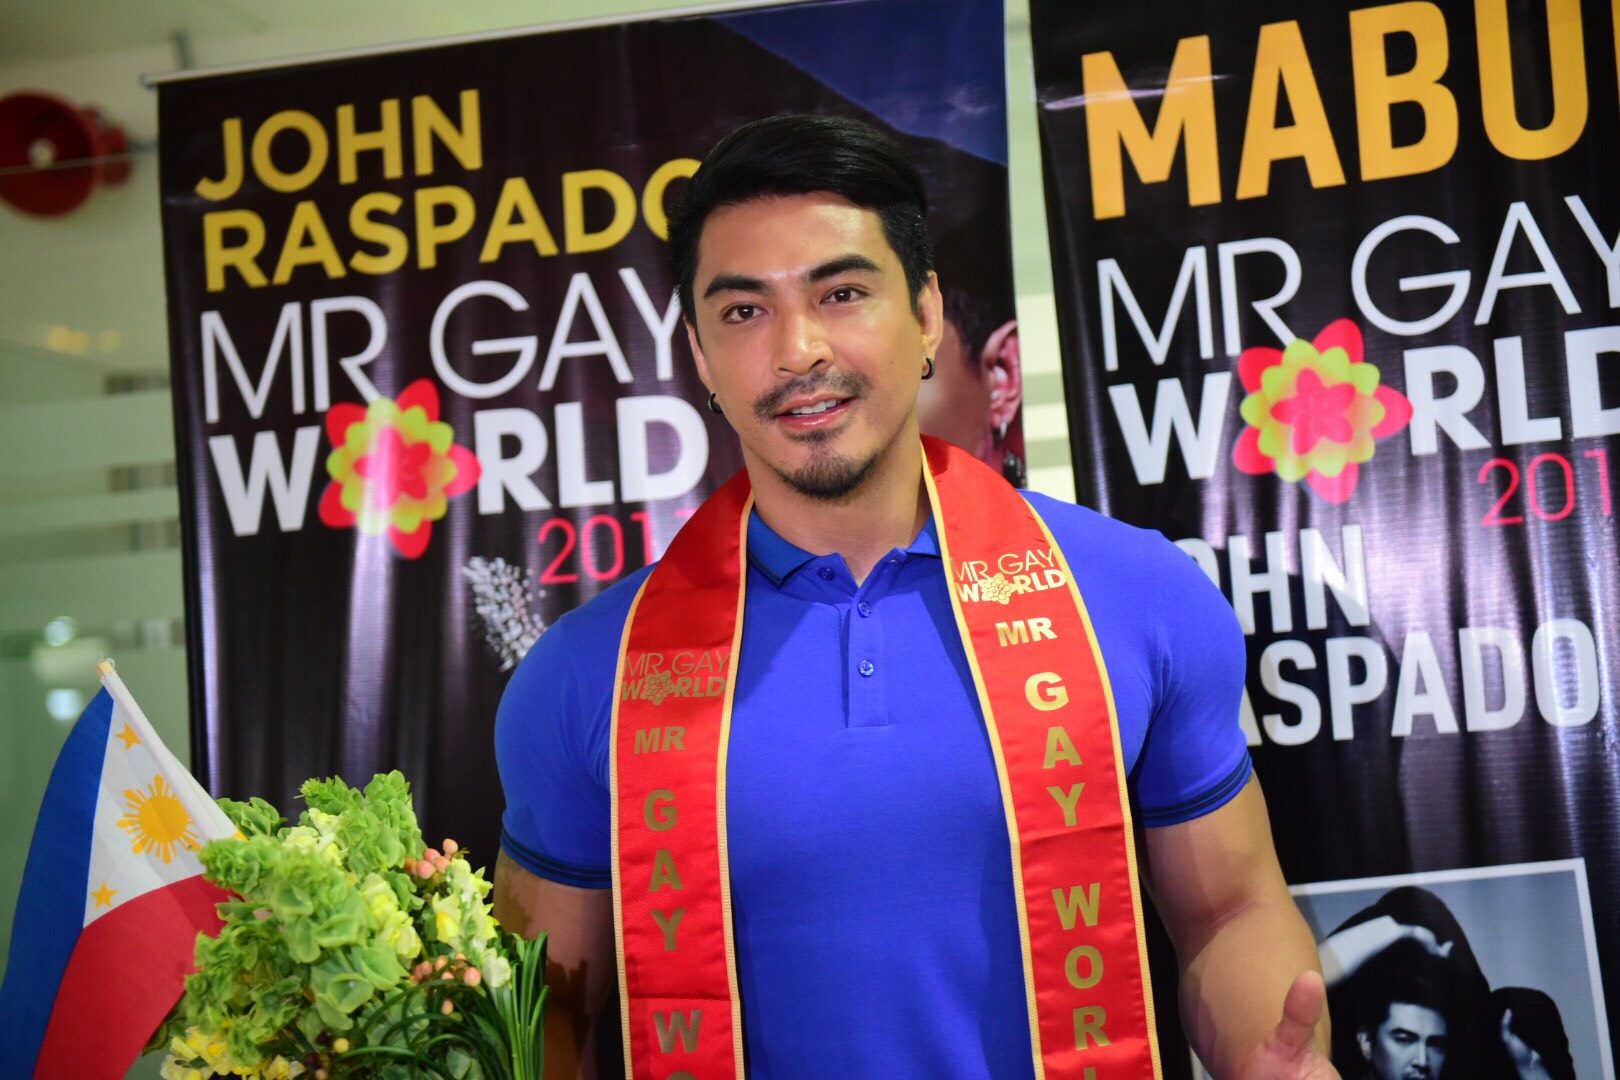 IN PHOTOS: John Raspado arrives in PH after winning Mr Gay World 2017